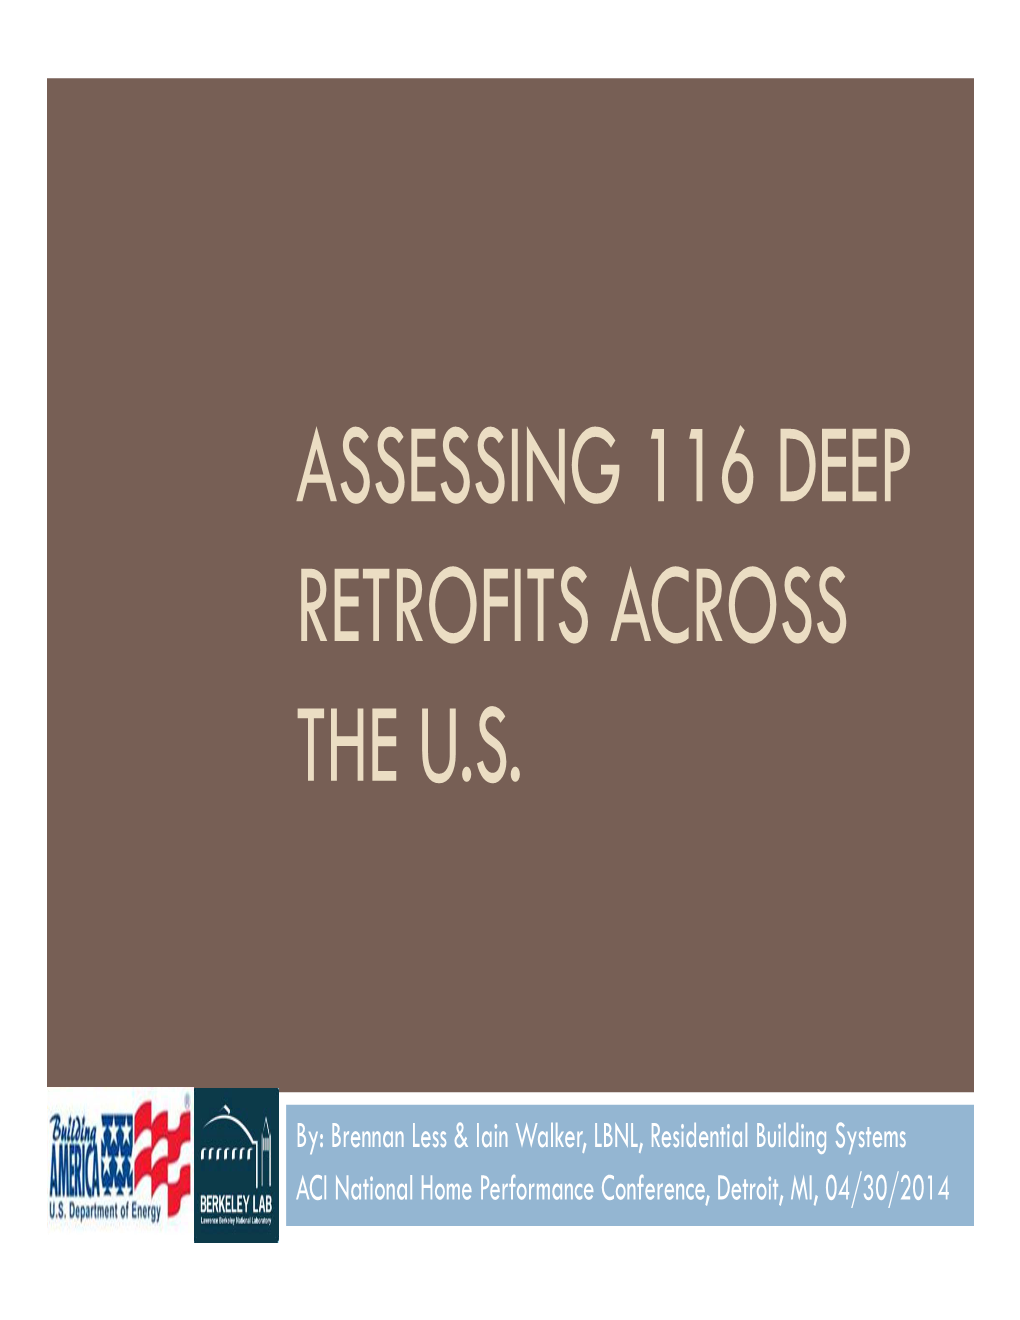 Assessing 116 Deep Retrofits Across the U.S